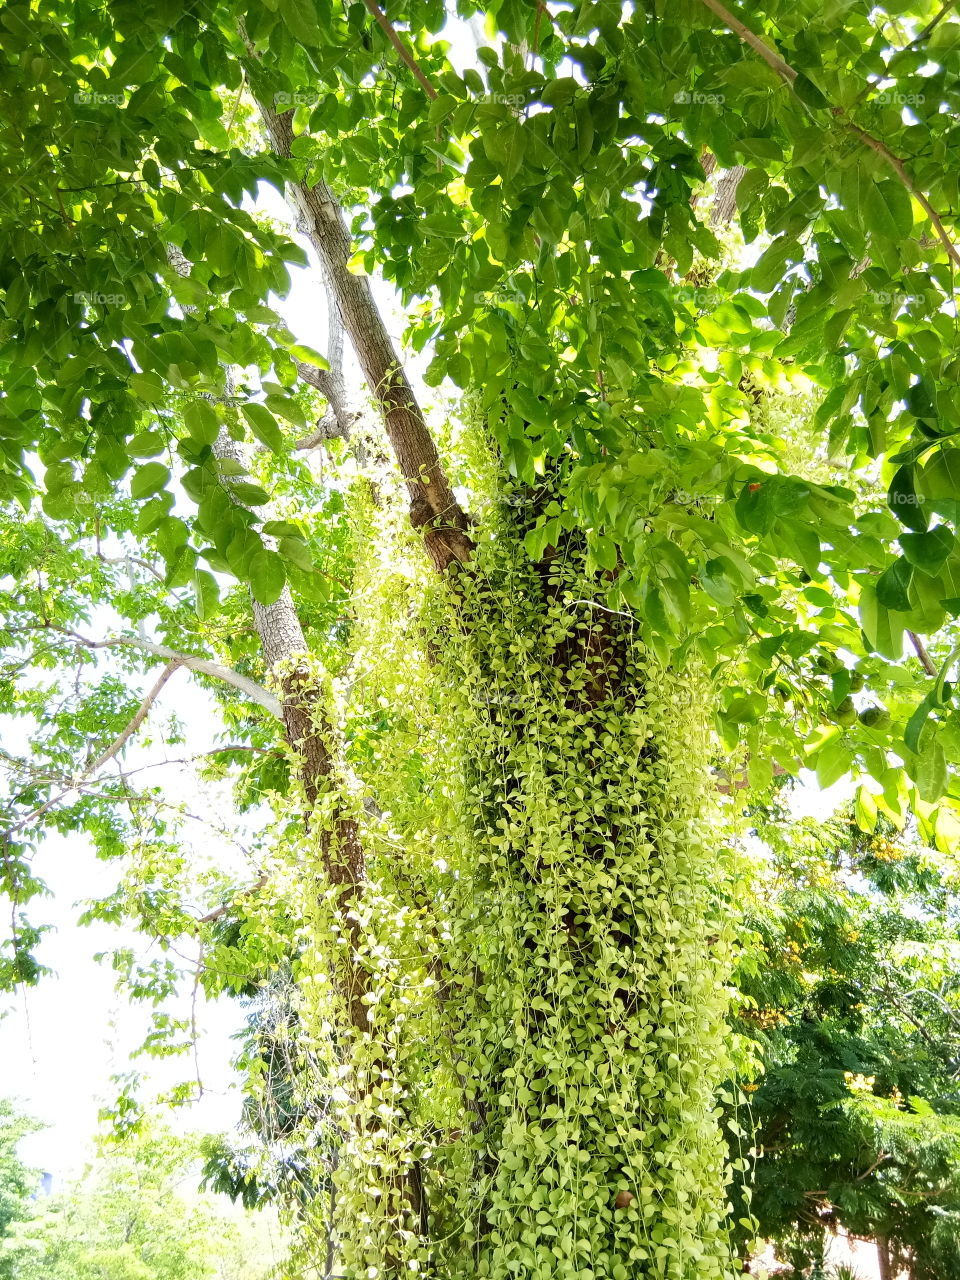 tree
tall
moss
fern
nature
green
thailand